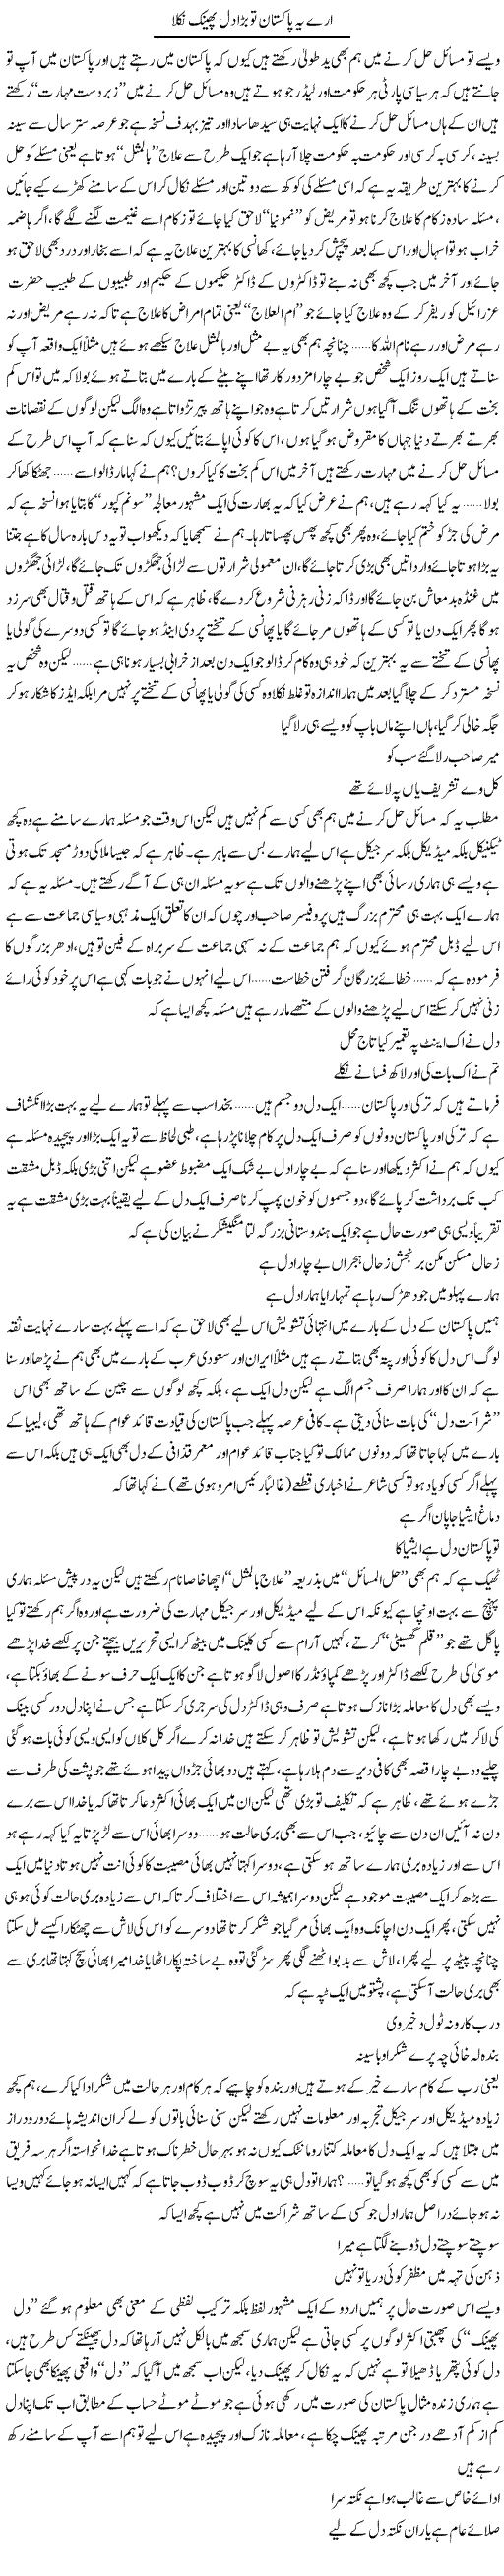 Arrey Yeh Pakistan To Bara Dil Pheink Nikla | Saad Ullah Jan Barq | Daily Urdu Columns